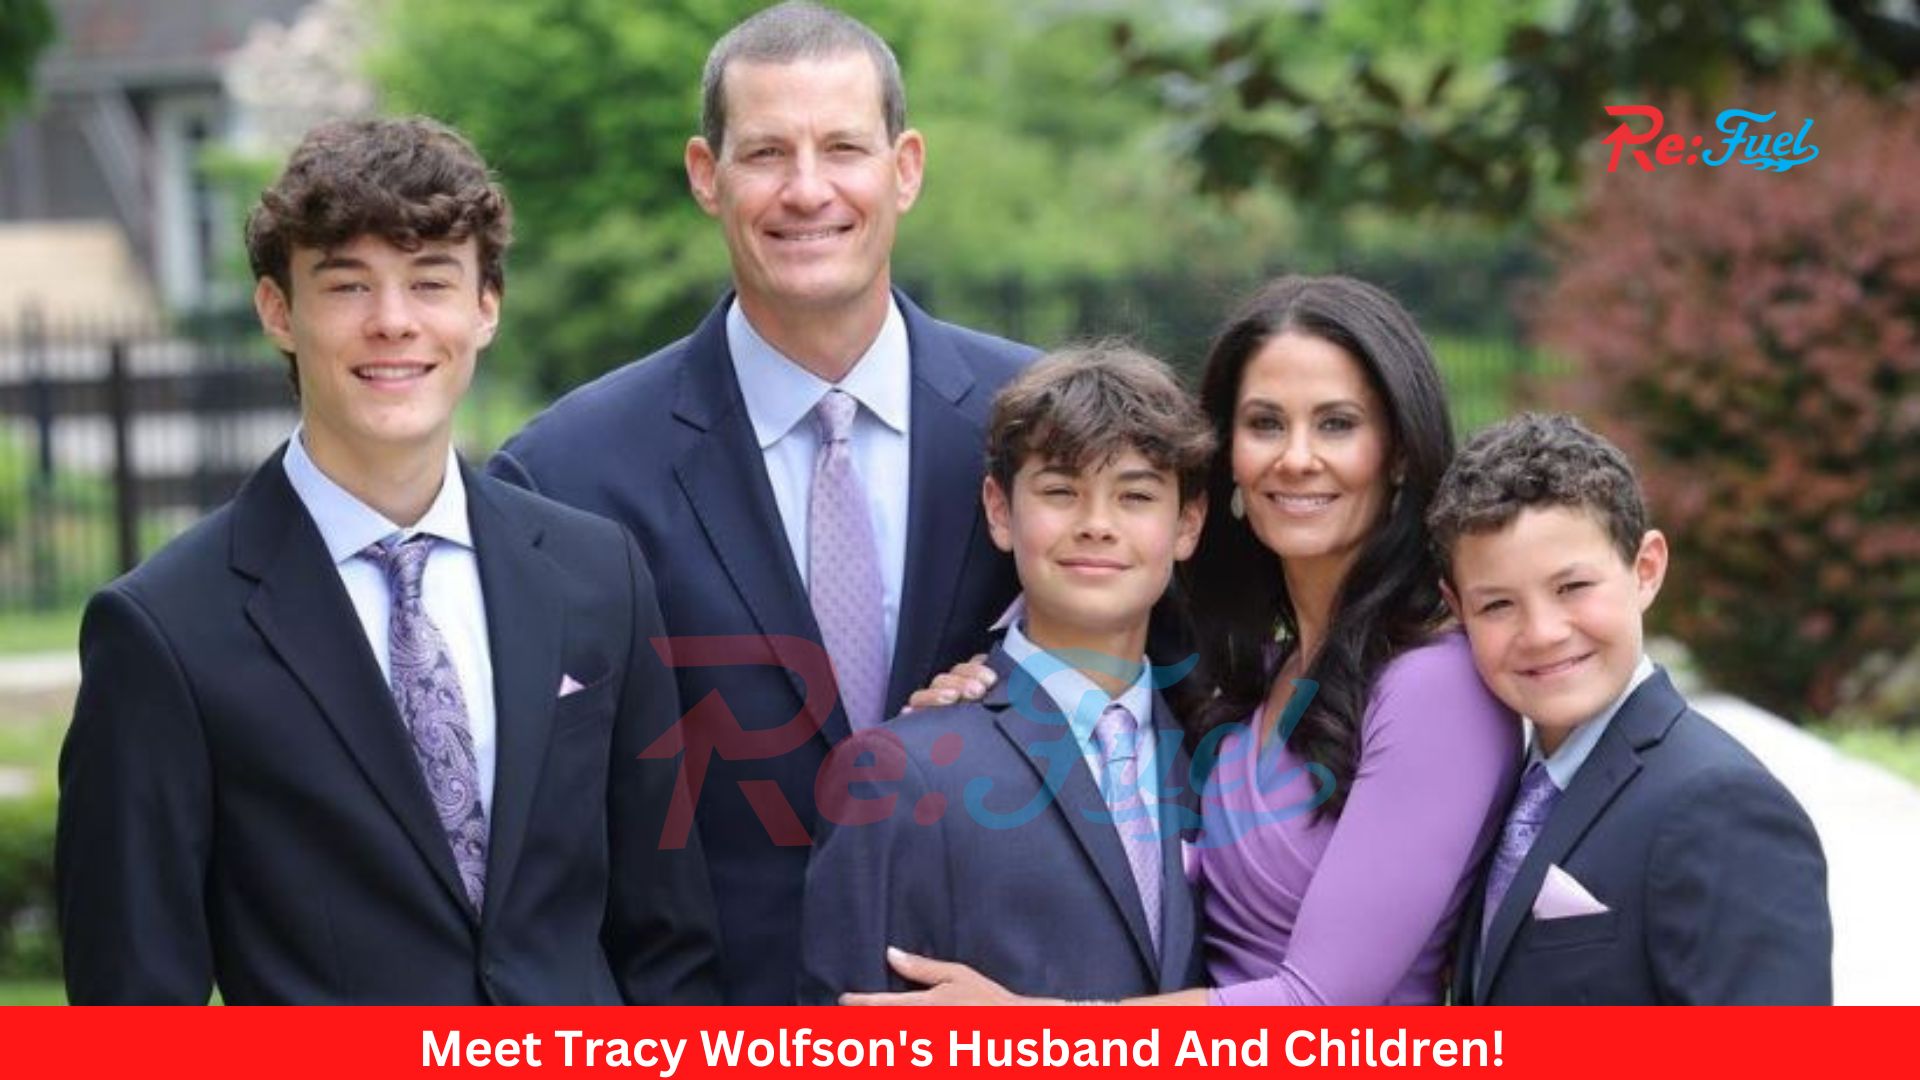 Meet Tracy Wolfson's Husband And Children!